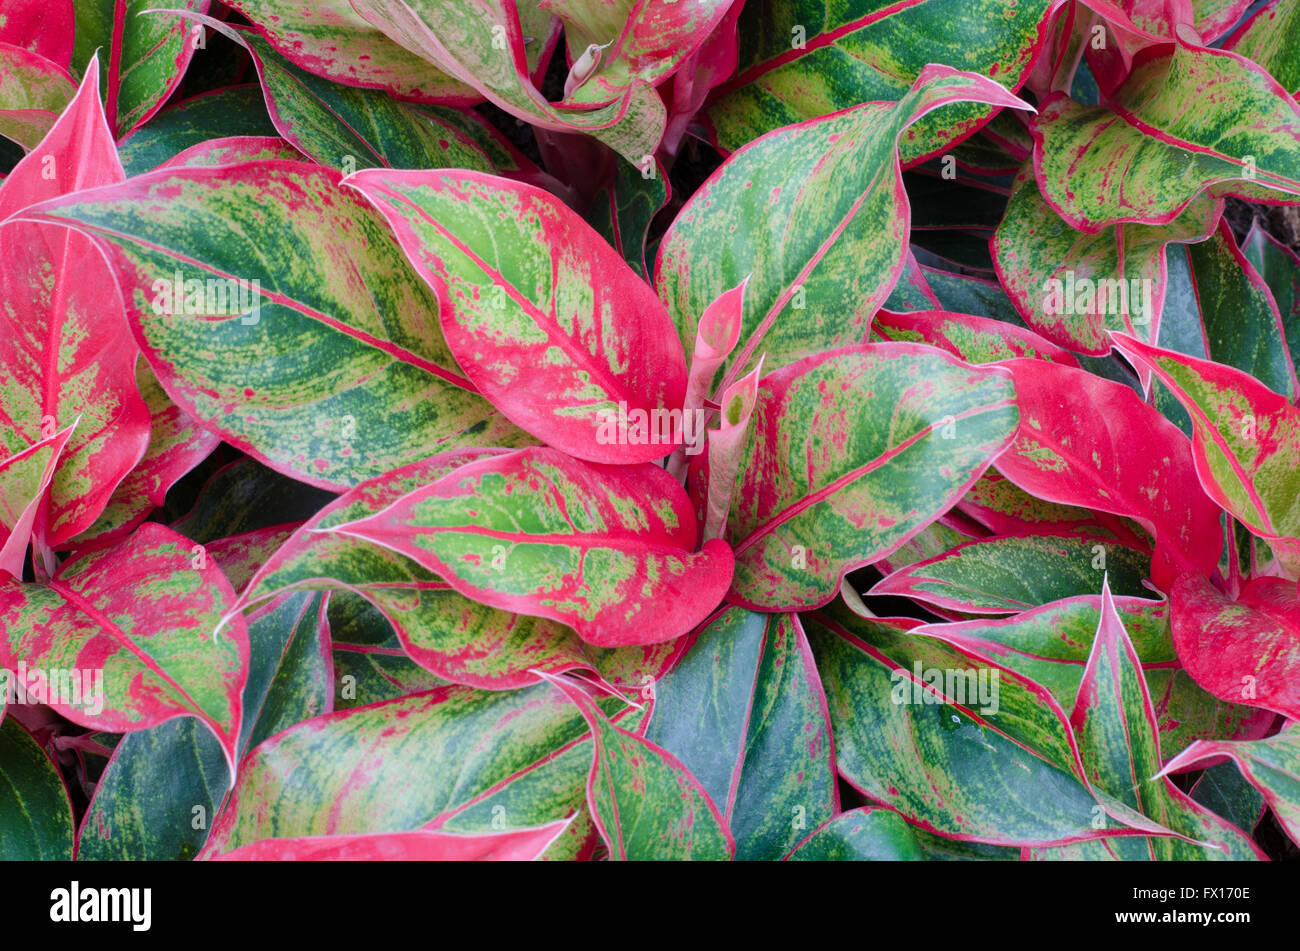 Aglaonema leaves background Stock Photo